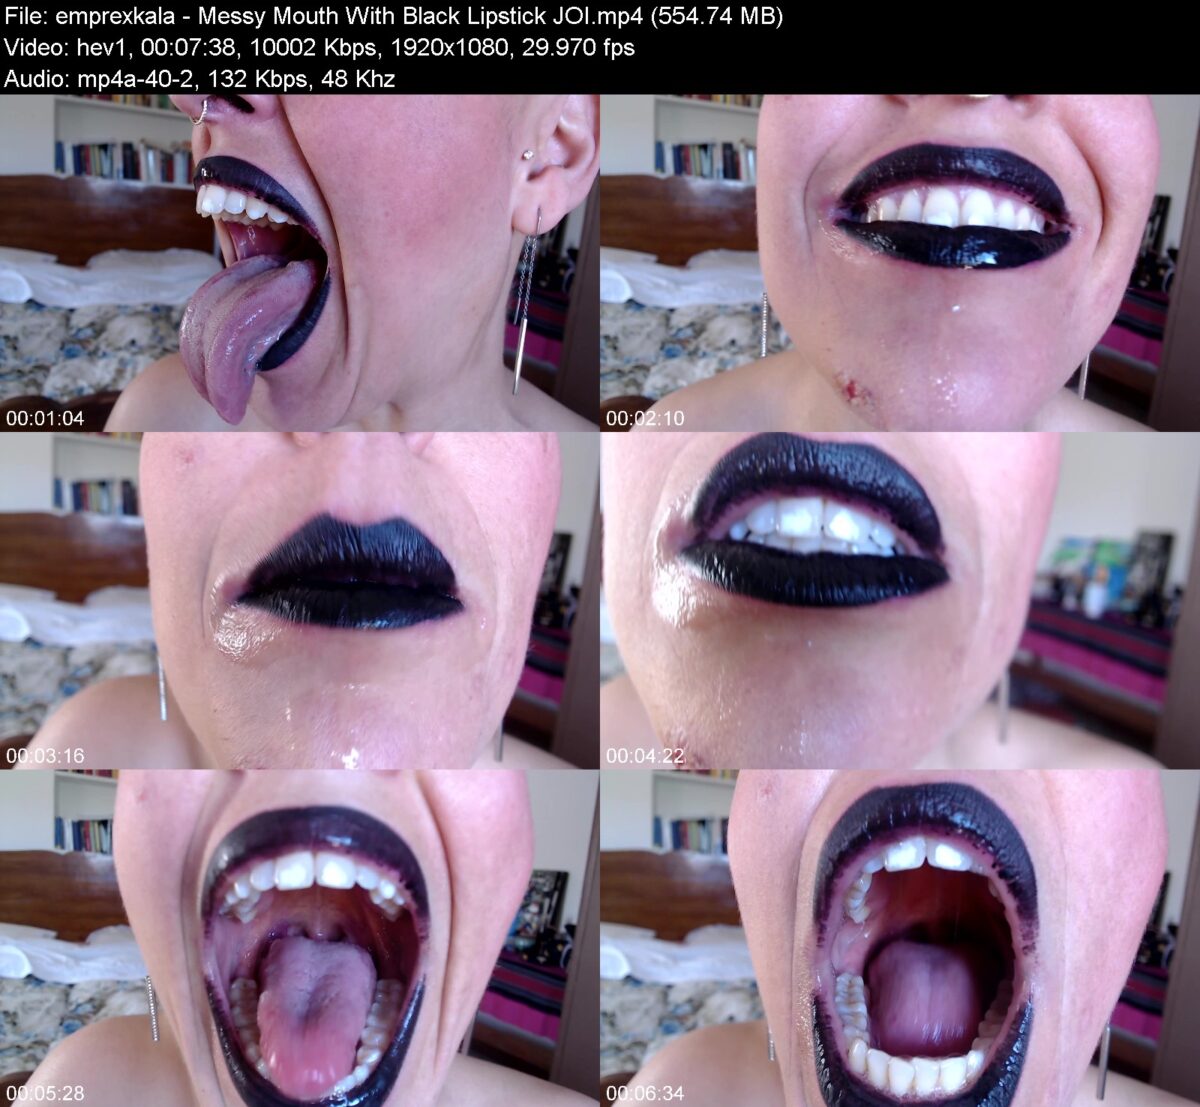 emprexkala - Messy Mouth With Black Lipstick JOI